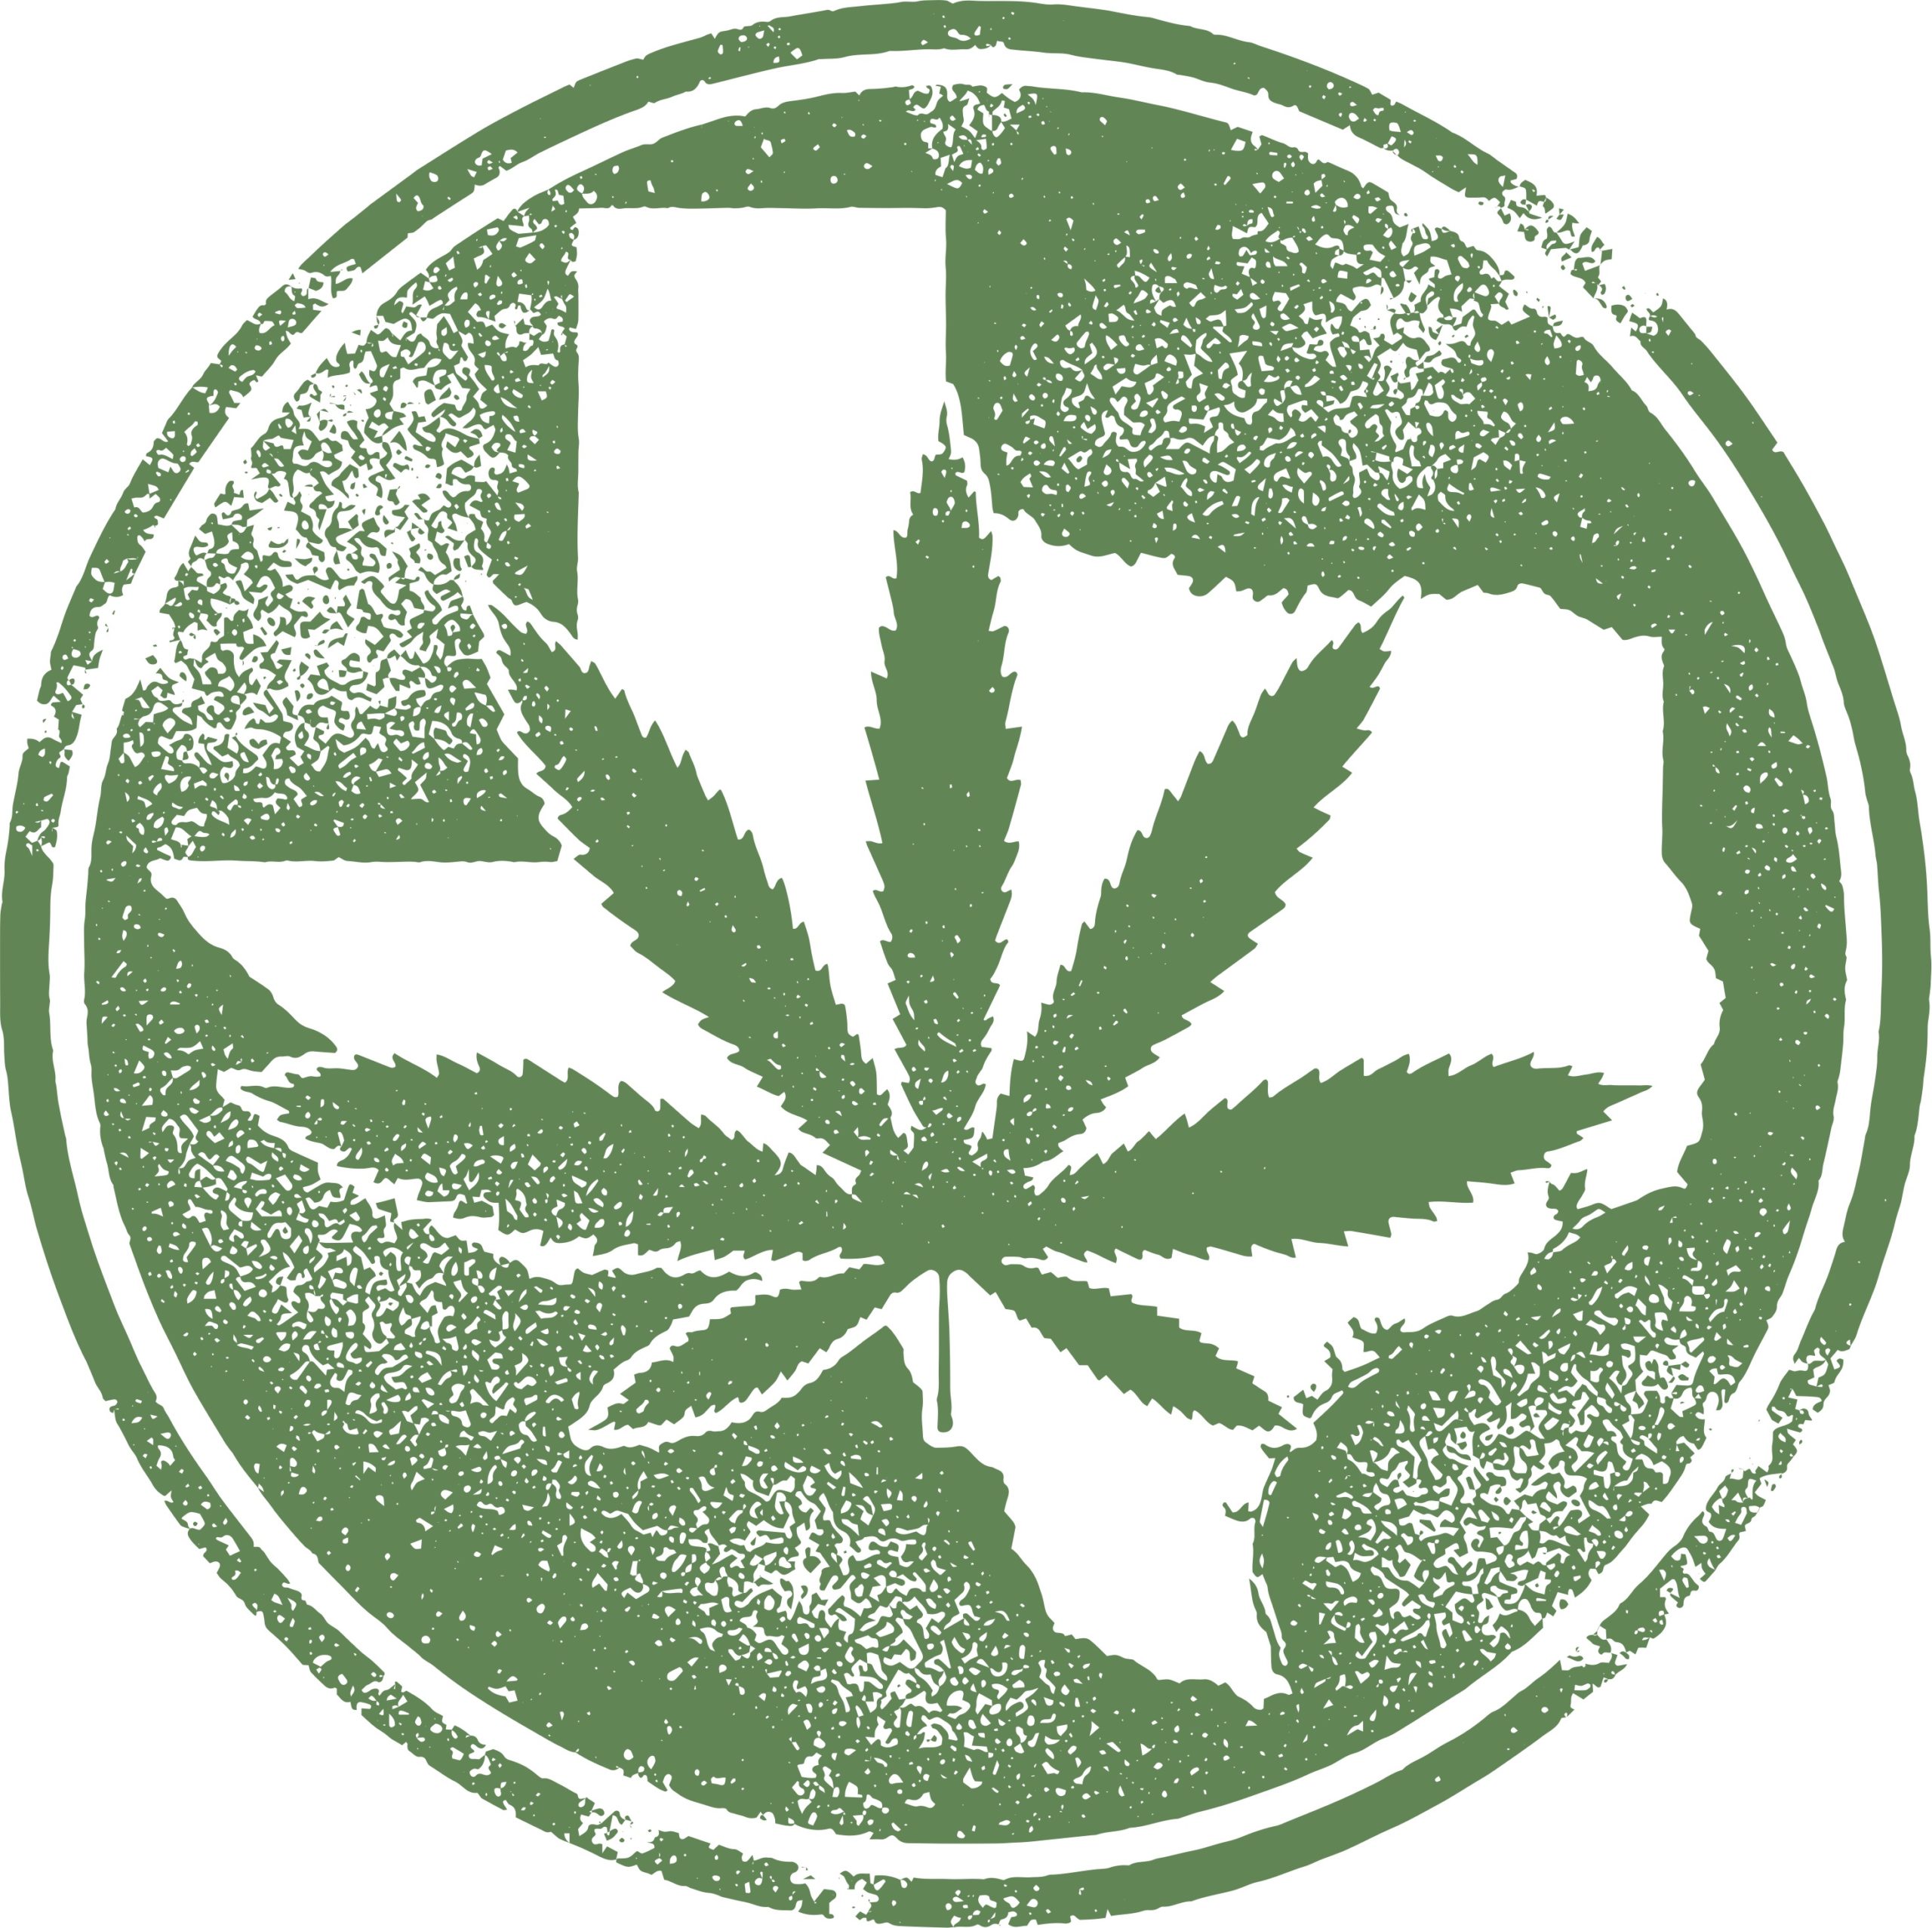 Texas weed laws growing